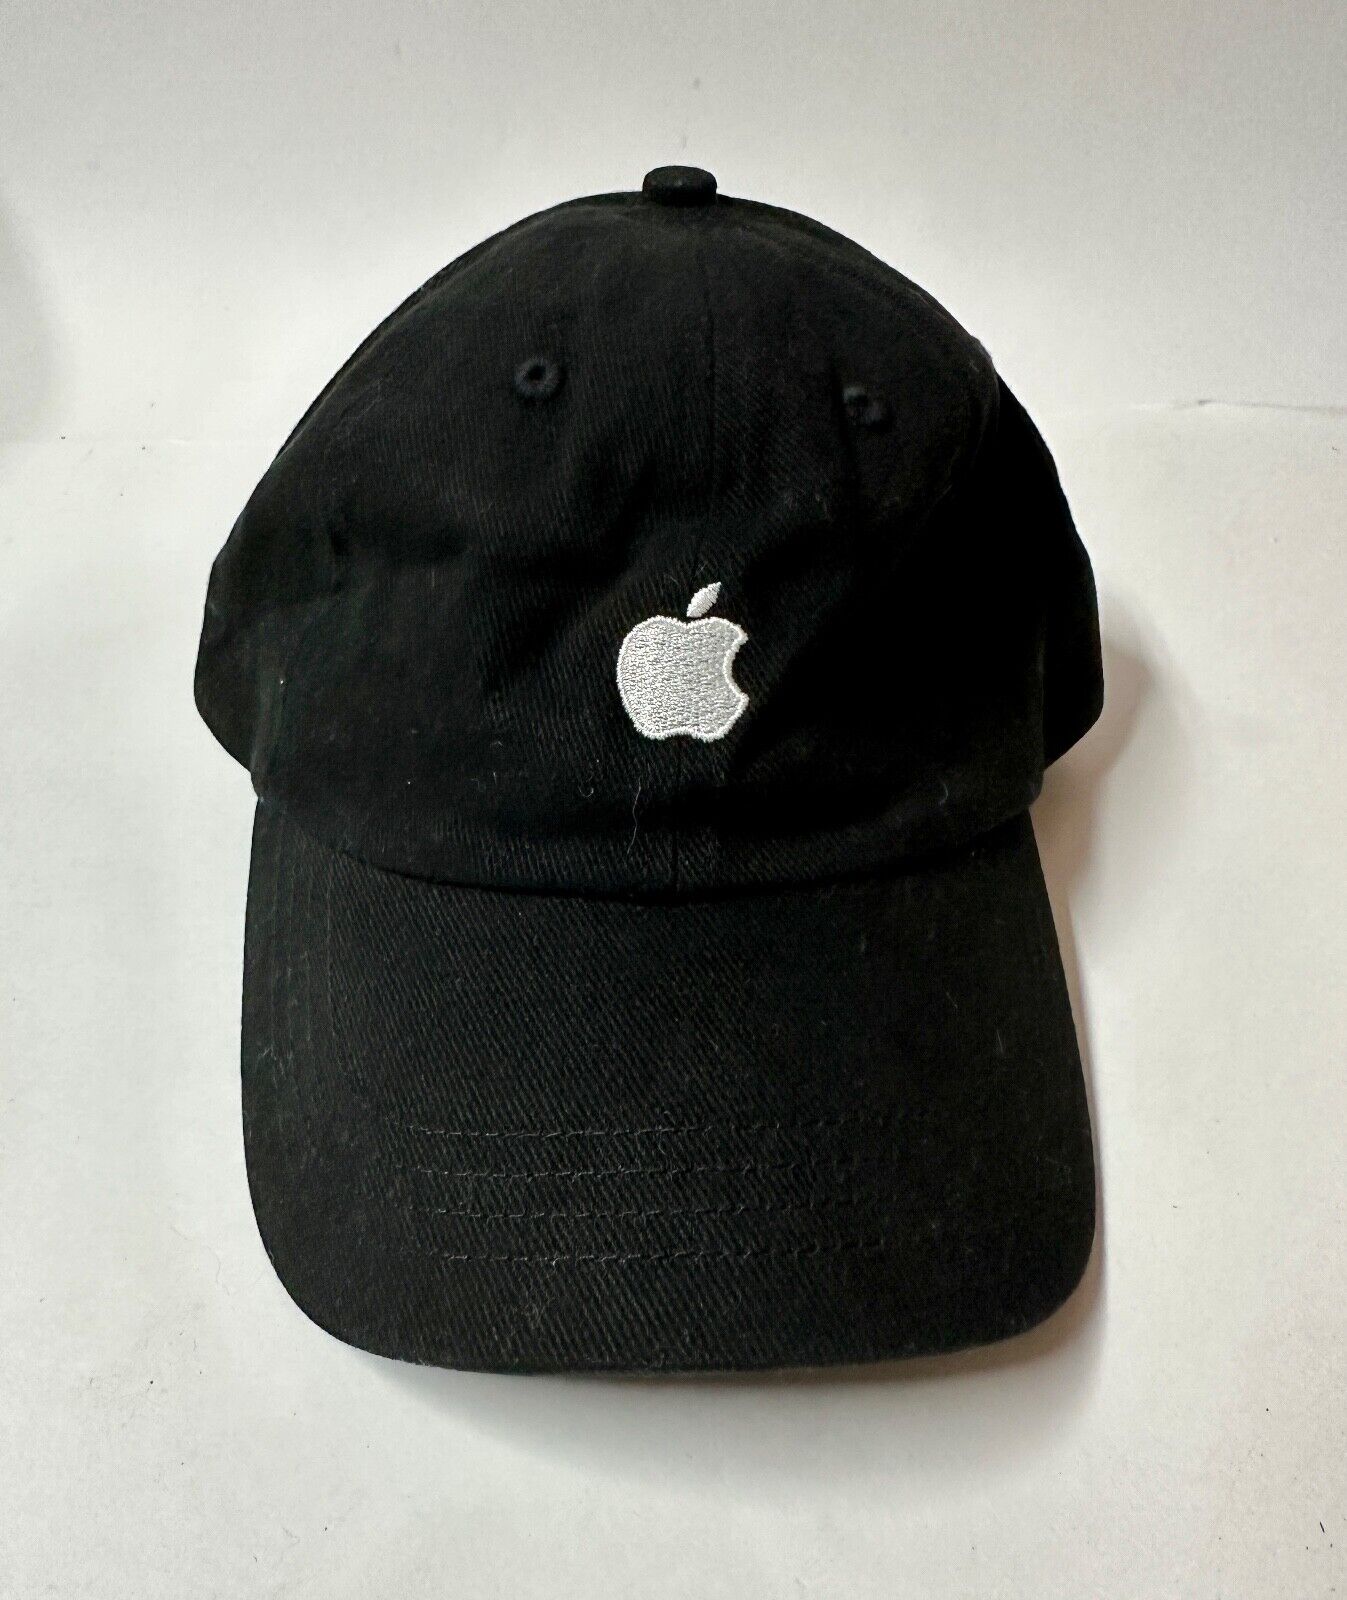 NOS - 1990's Apple Computer Macintosh  Black Adjustable Baseball style Hat Cap